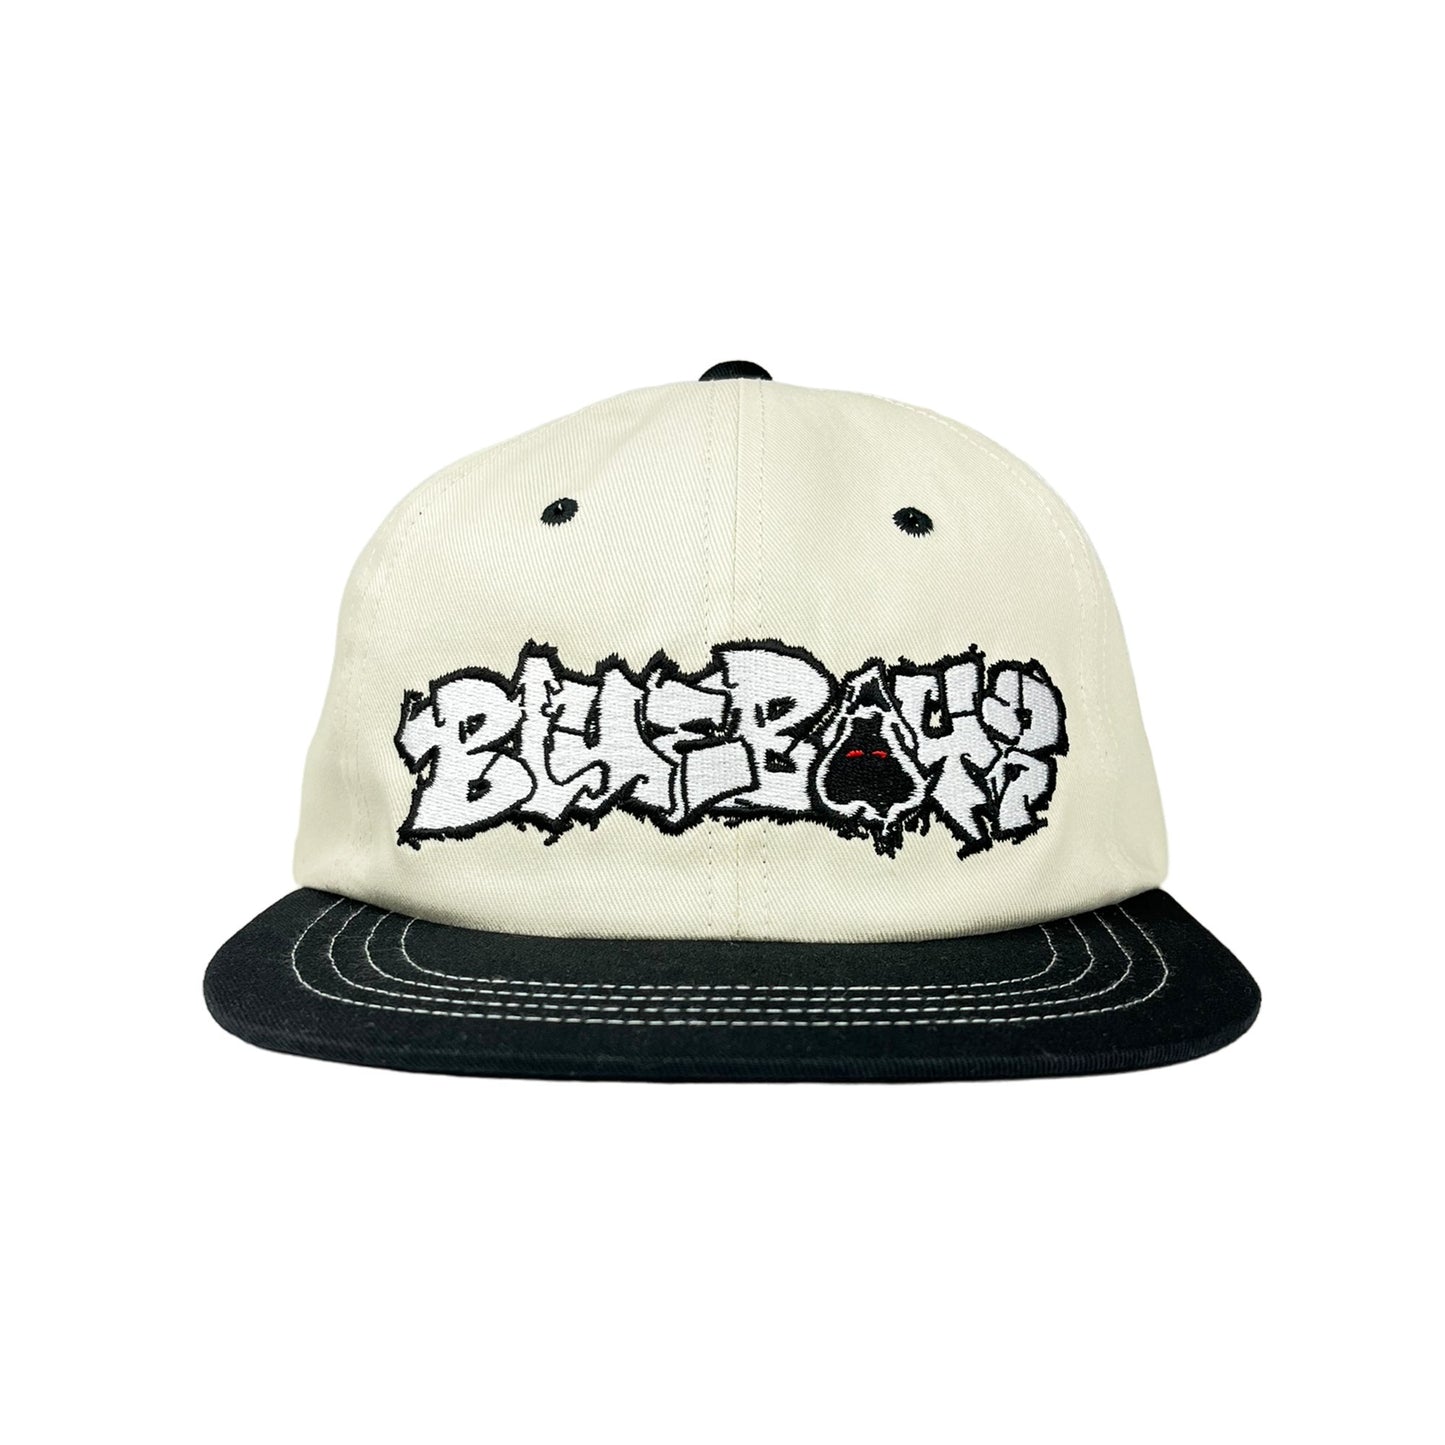 BlueBoyzSportsClub - Mosher Cap (Off White/ Black)